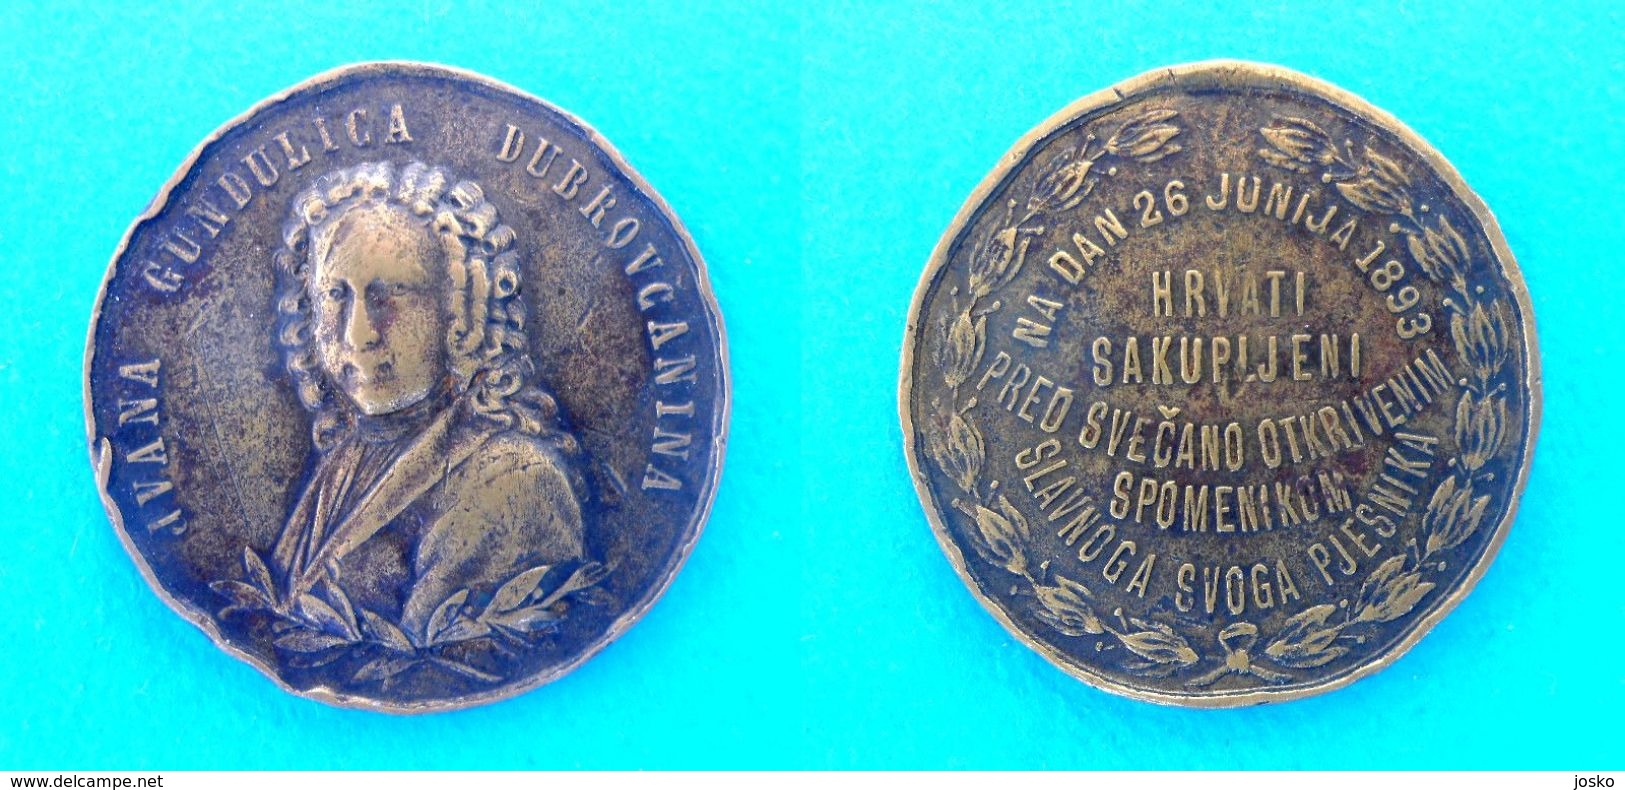 IVAN GUNDULIC ... Dubrovnik 26.06.1893. - Svecano Otkrivanje Spomenika  ***  Croatia Original Vintage Bronze Medal RRRRR - Croatia